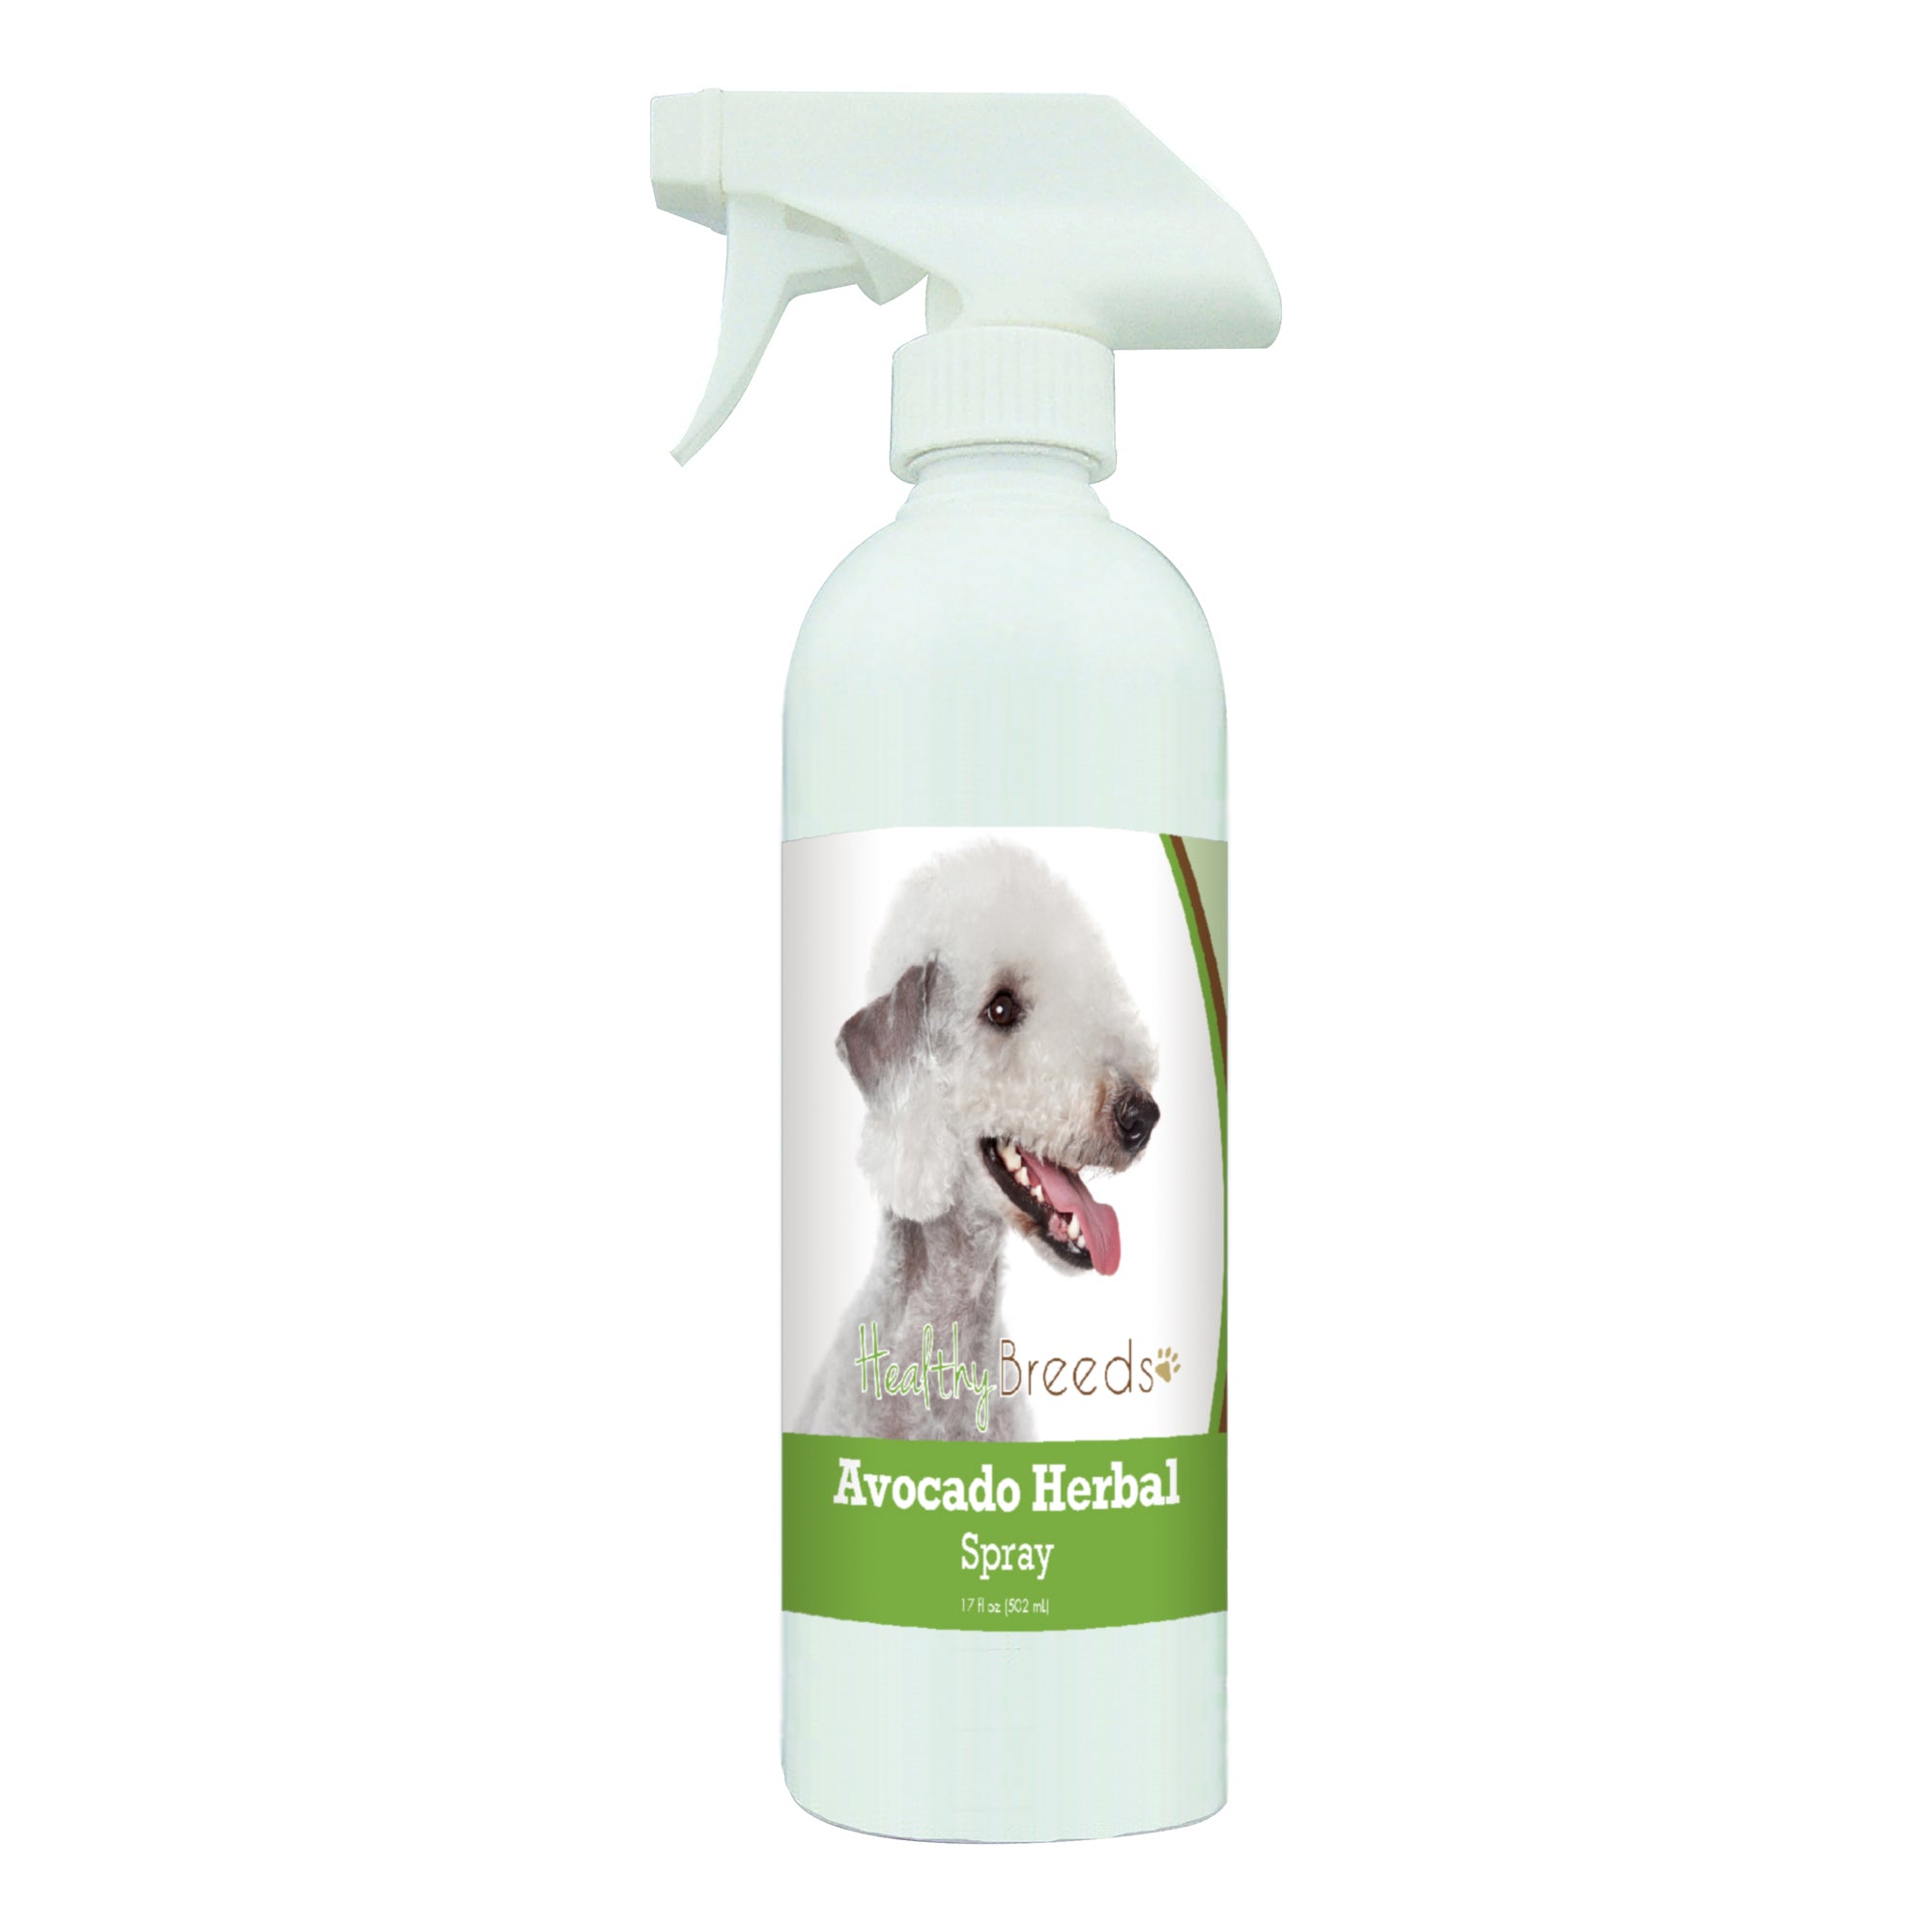 Bedlington Terrier Avocado Herbal Spray 17 oz